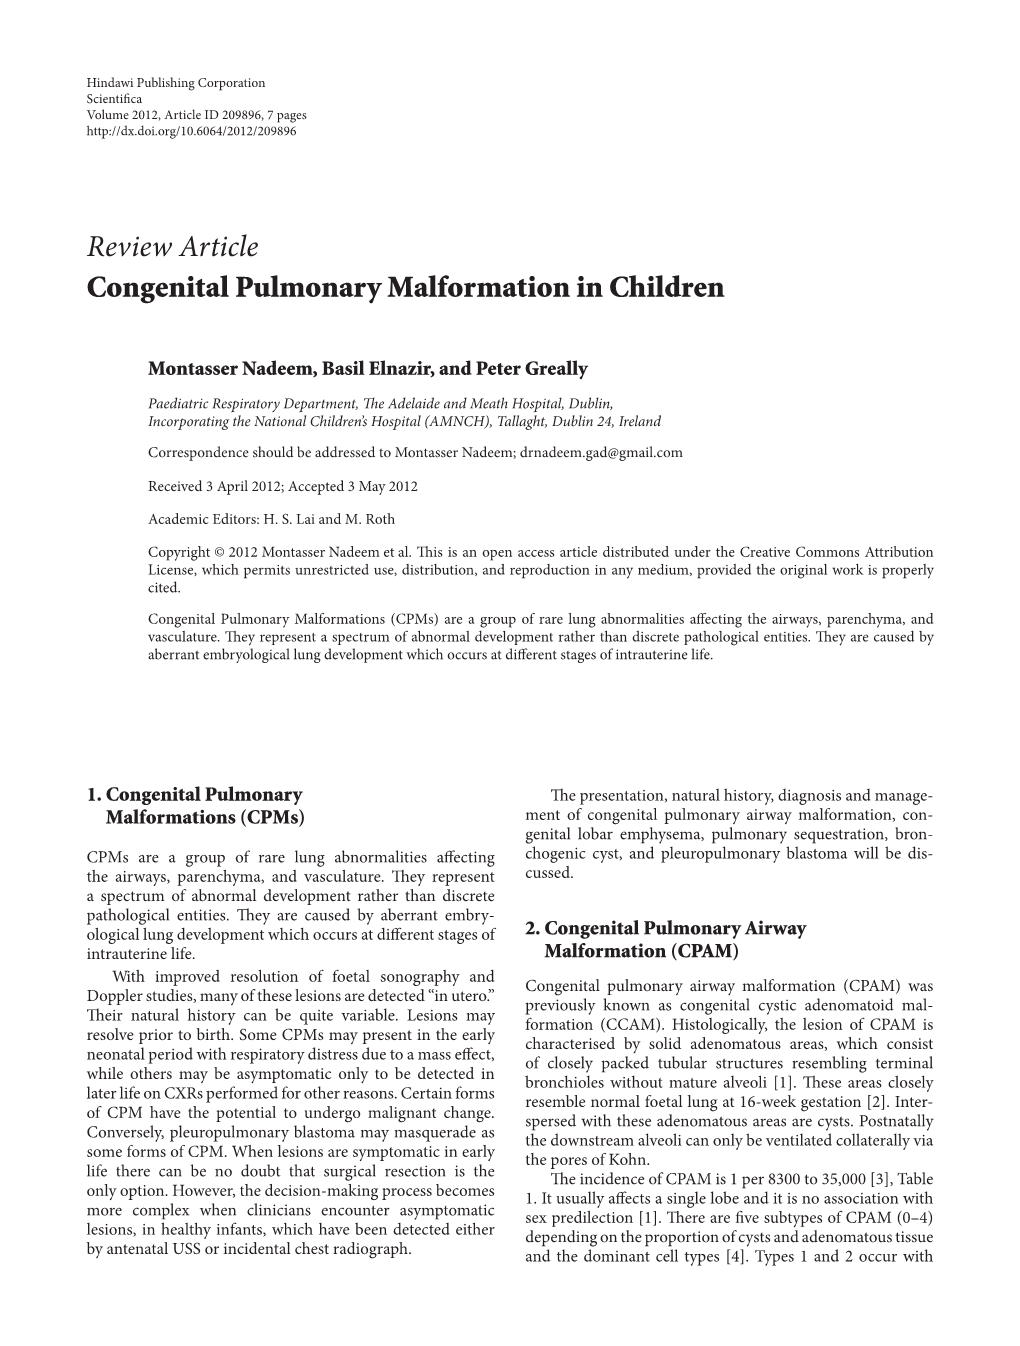 Congenital Pulmonary Malformation in Children